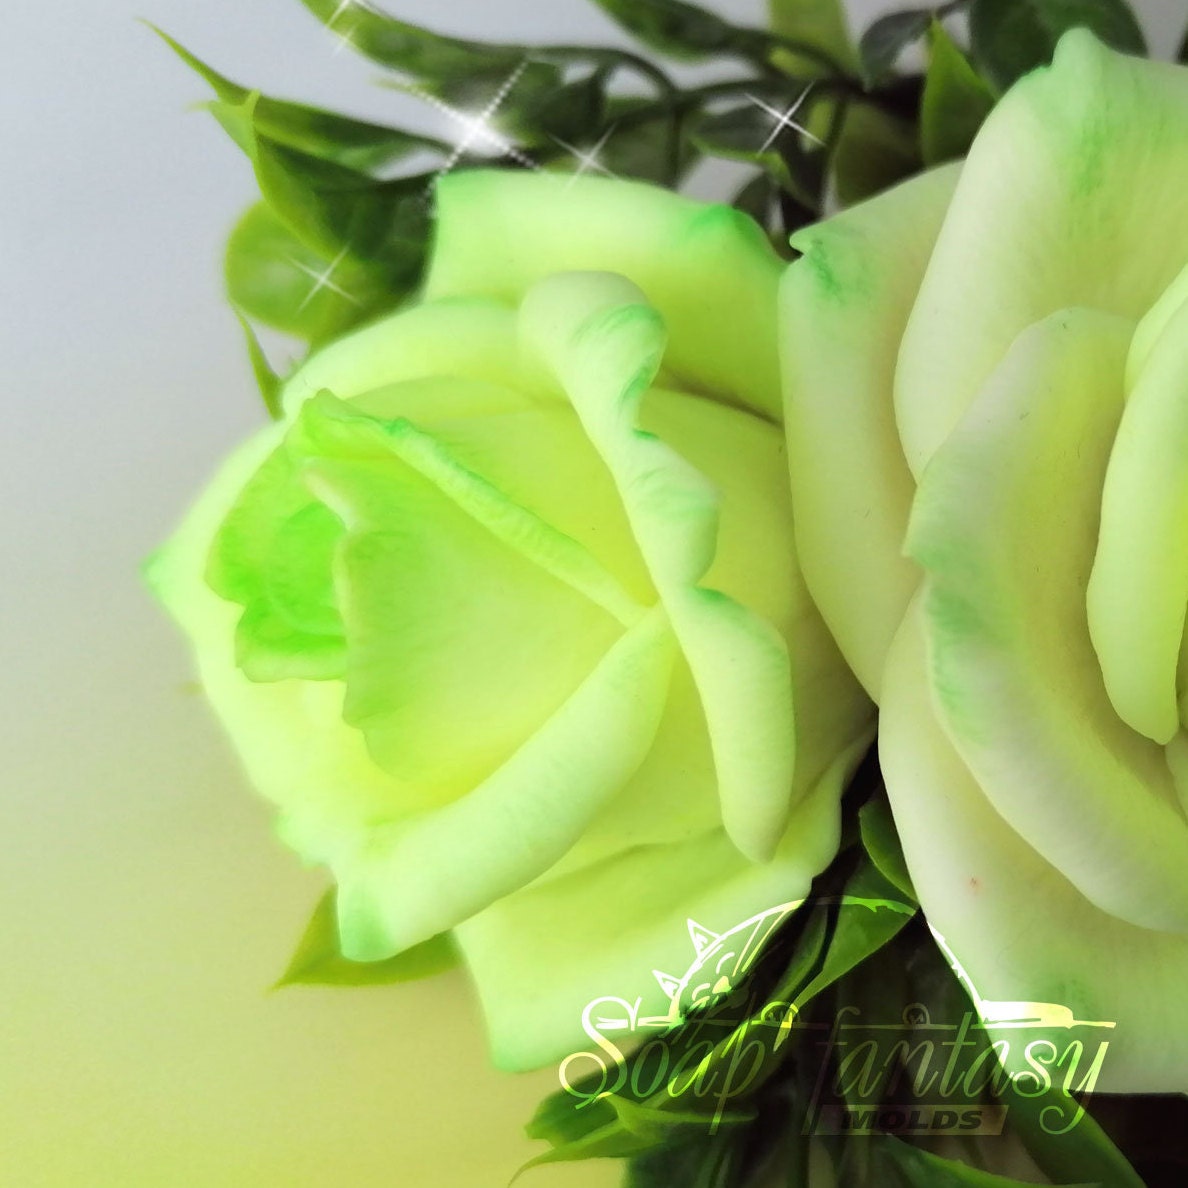 Rosebud "Green Tea" silicone mold for soap making